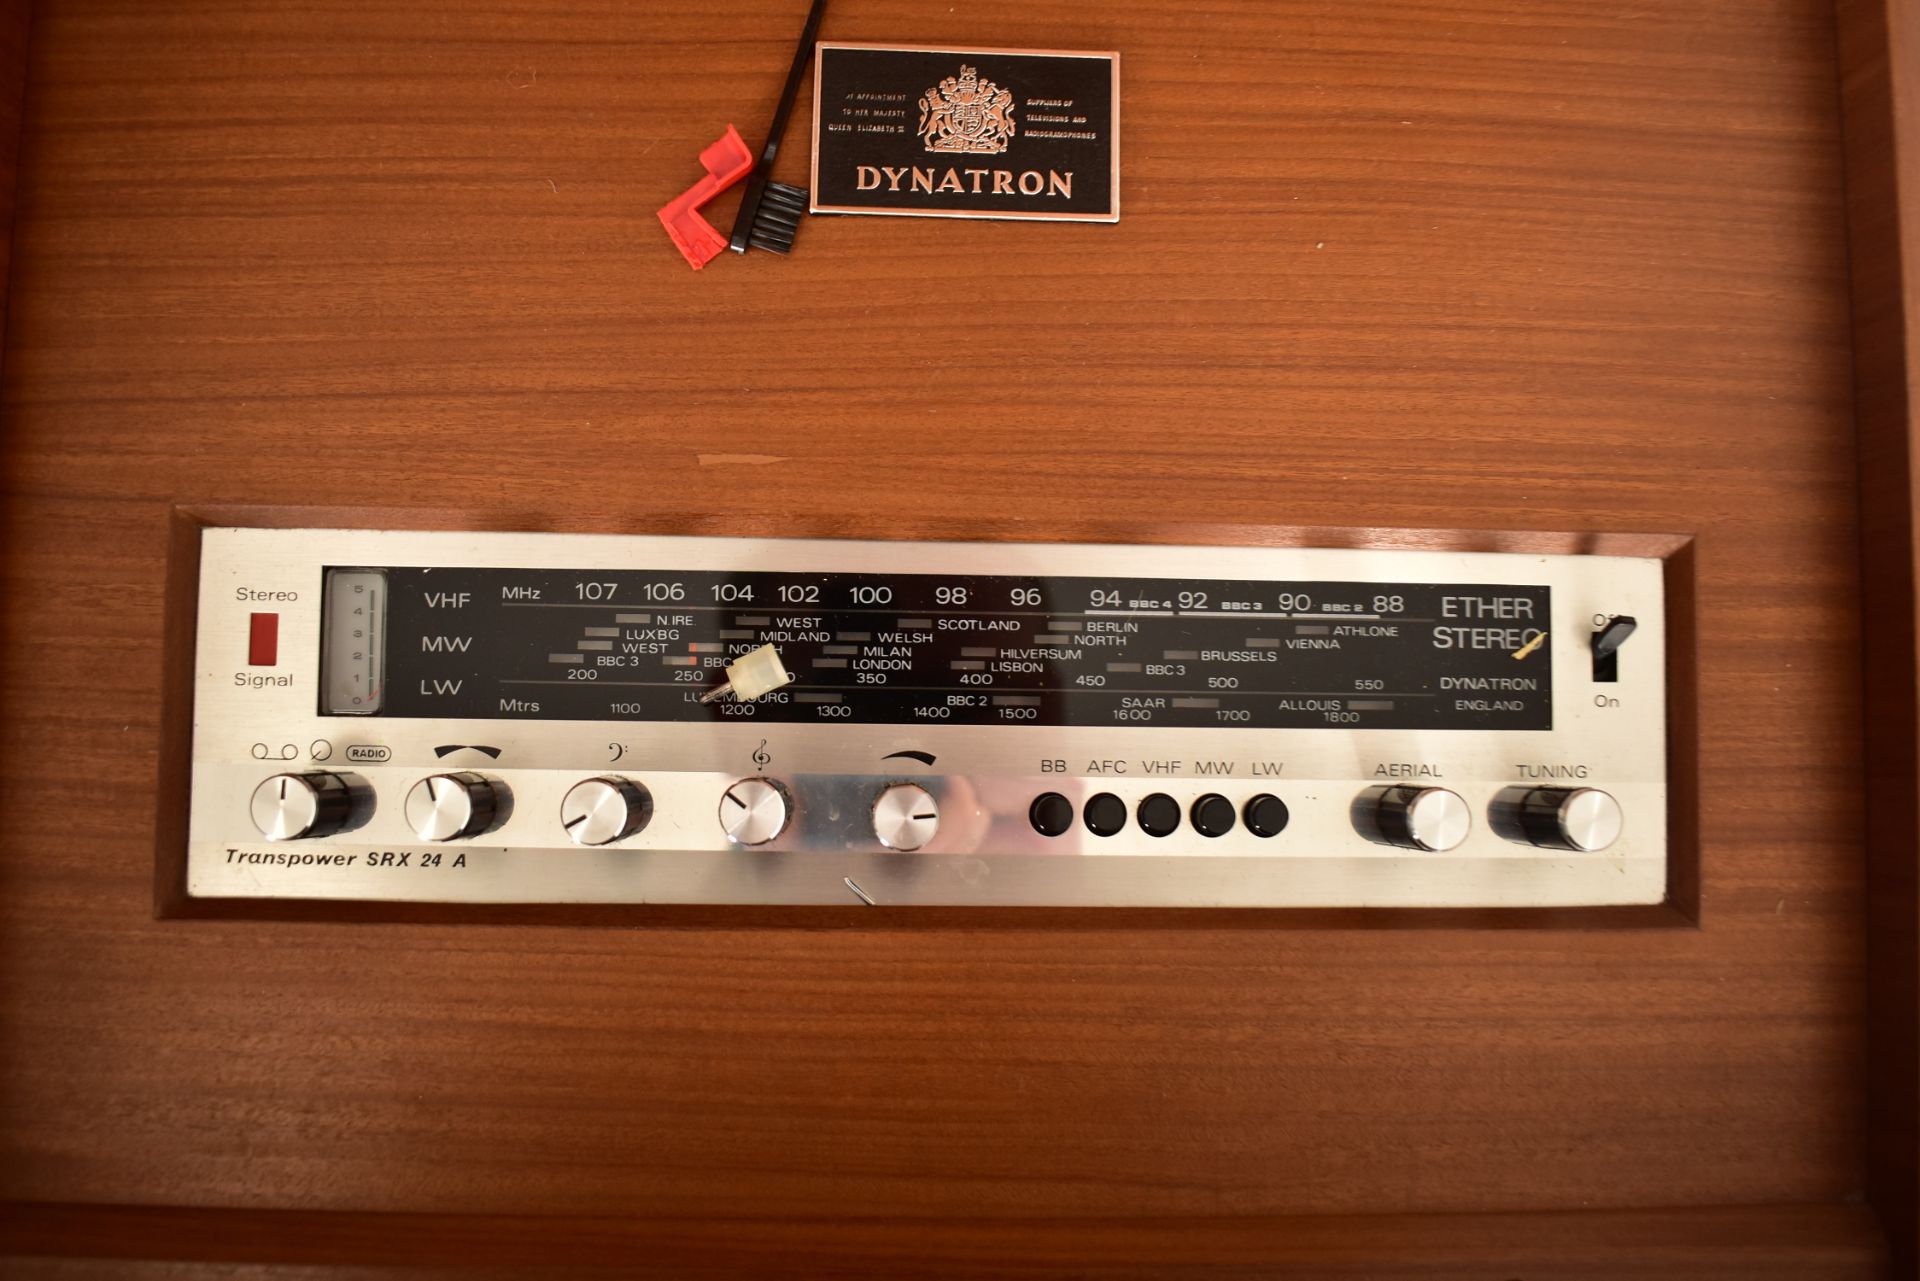 DYNATRON - 60S TEAK CASED RADIOGRAM WITH GARRARD DECK - Image 4 of 7